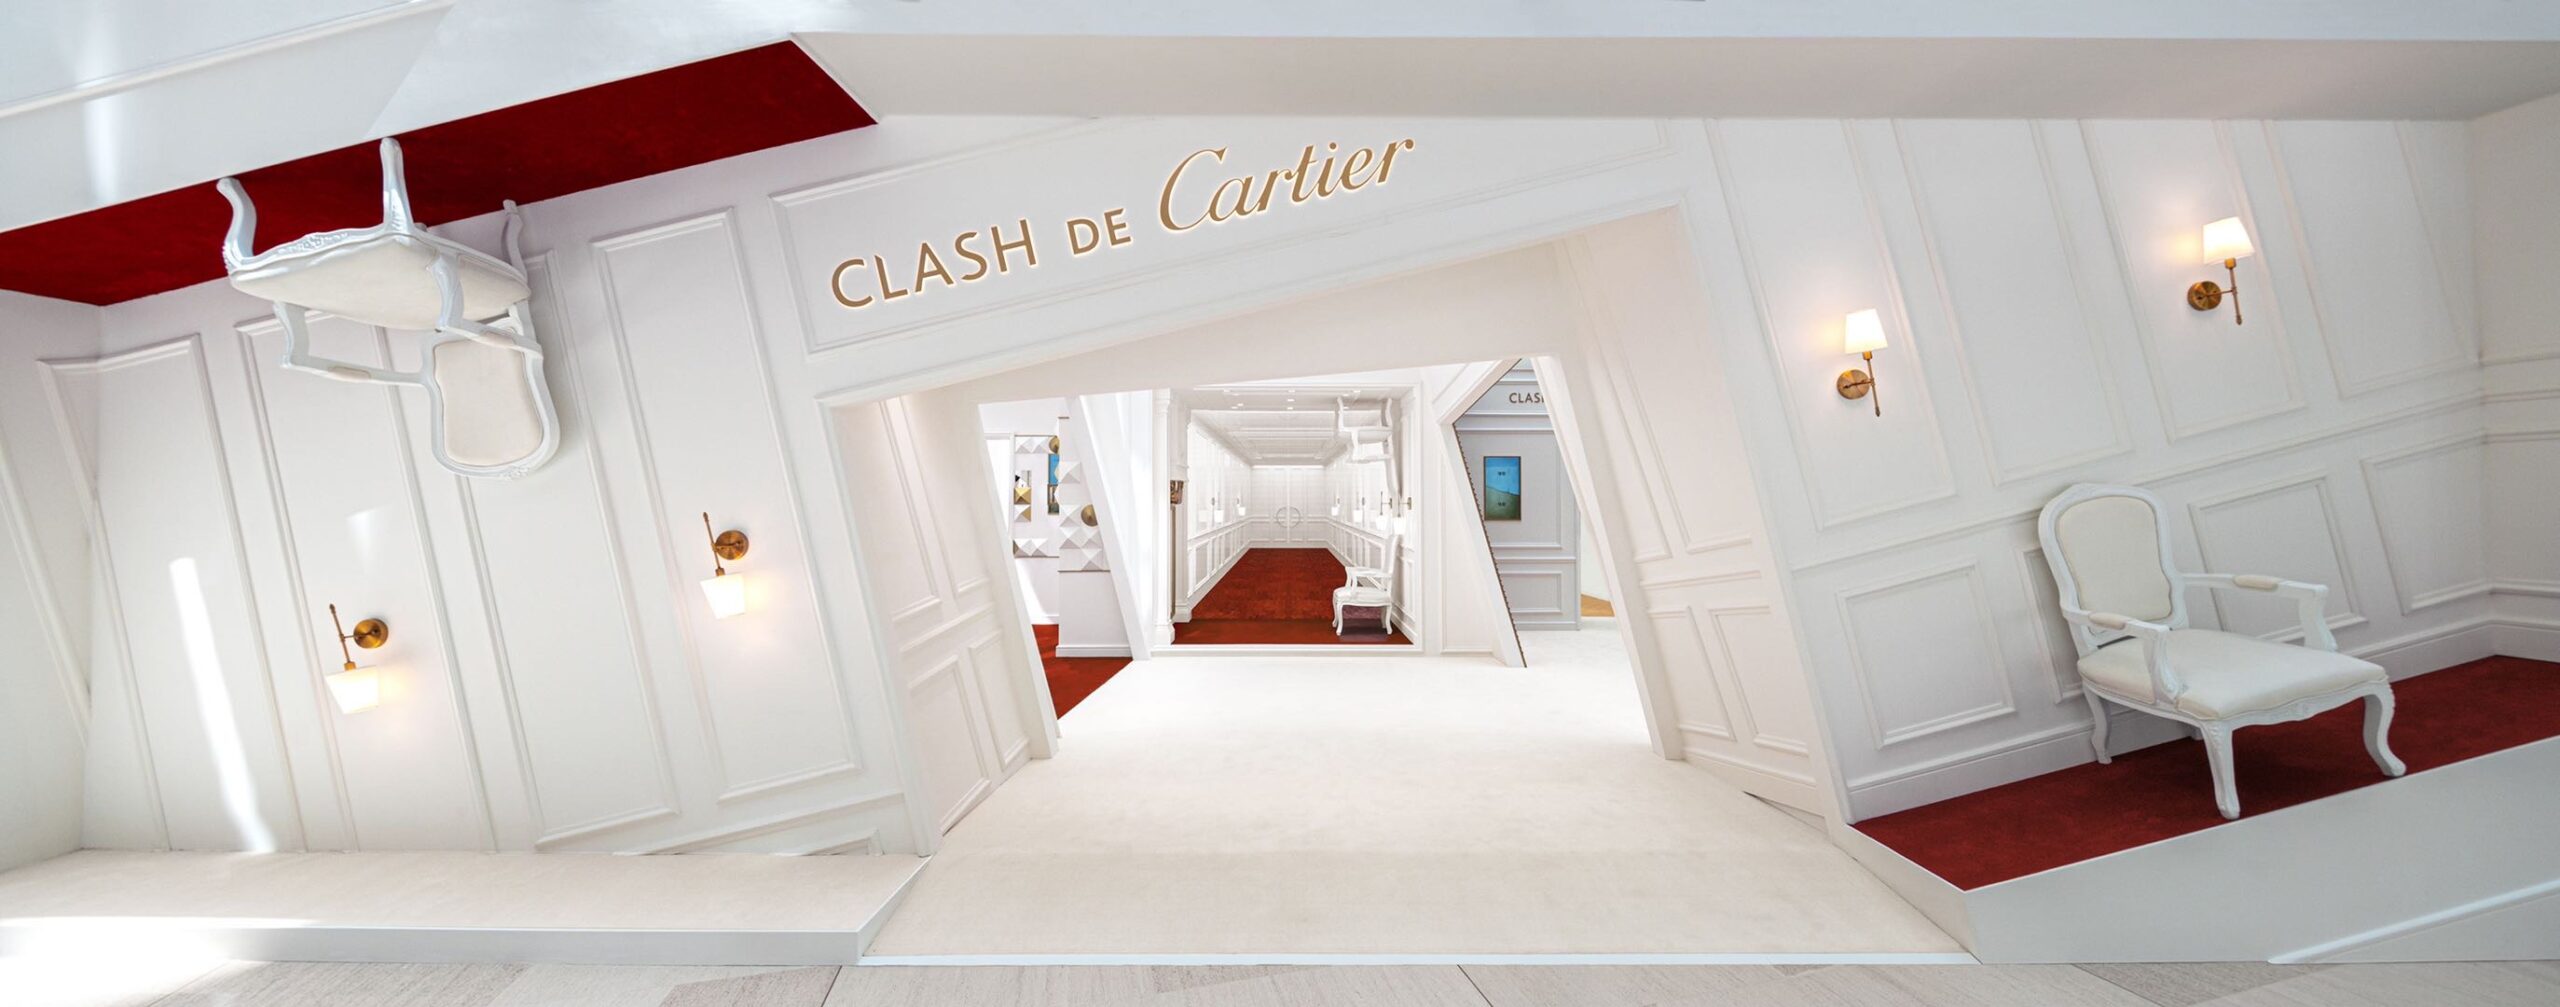 CLASH DE Cartier Shanghai May 19th – 21st 2020 – 9